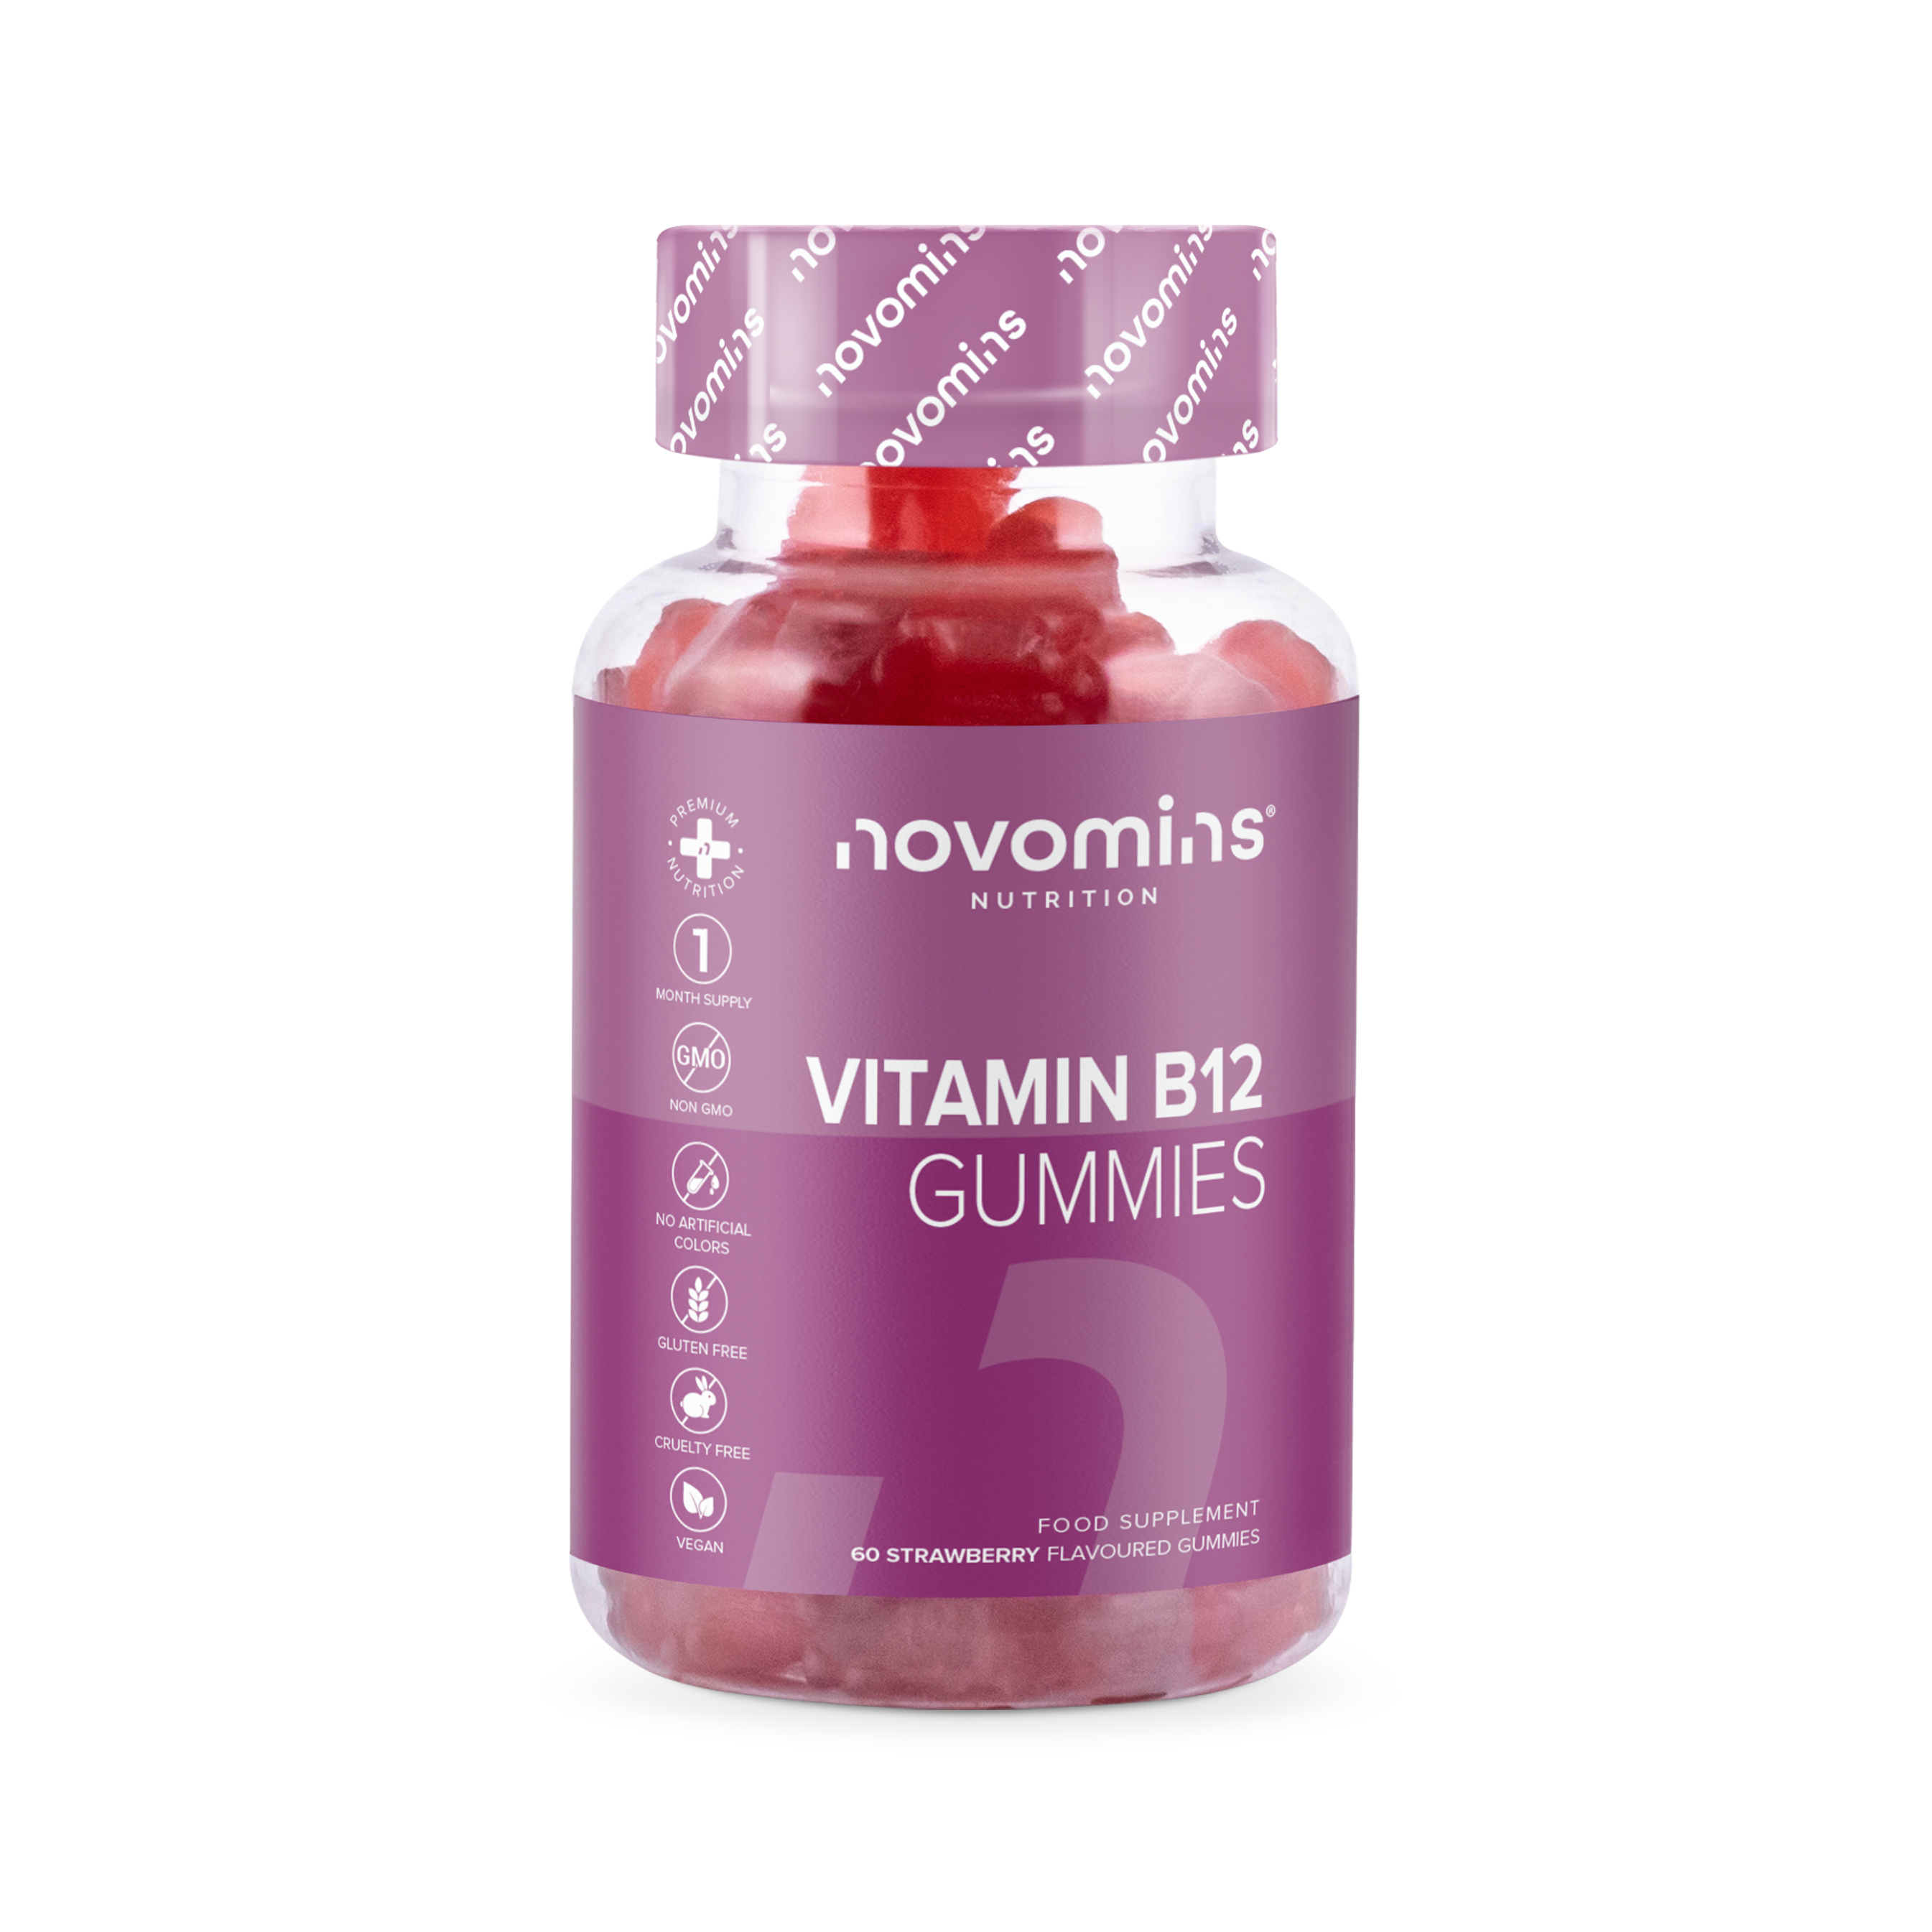 Novomins Vitamin B12 Gummies